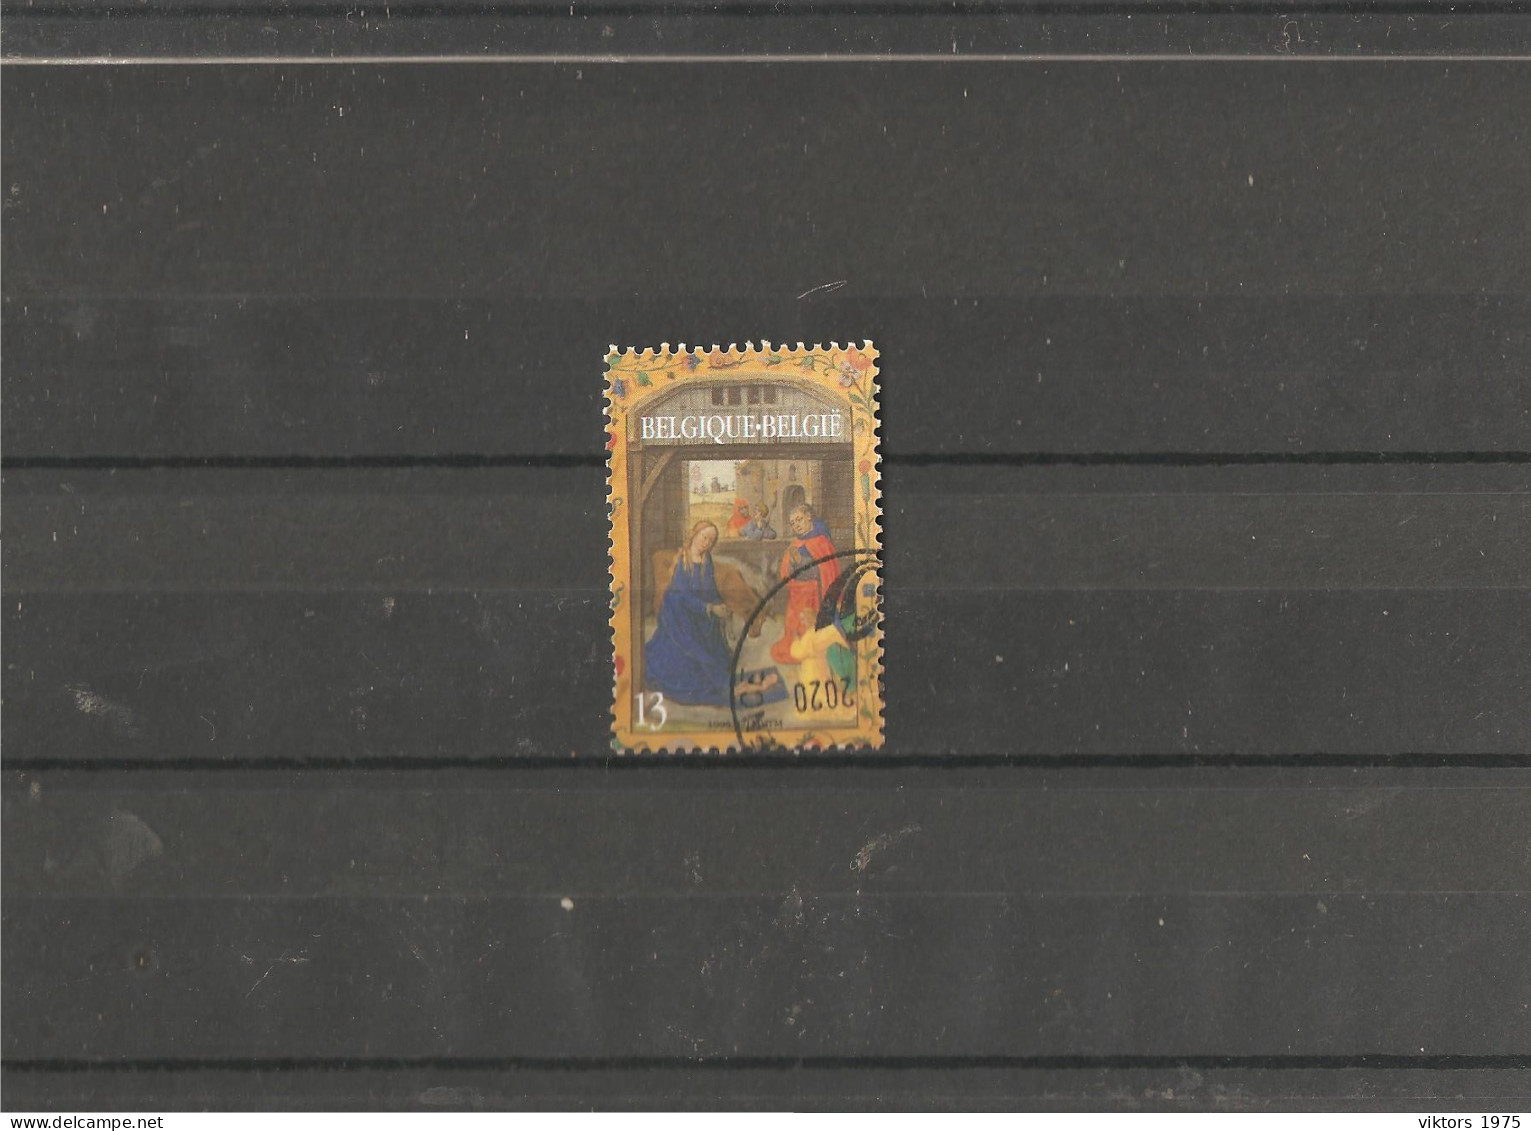 Used Stamp Nr.2674 In MICHEL Catalog - Gebraucht